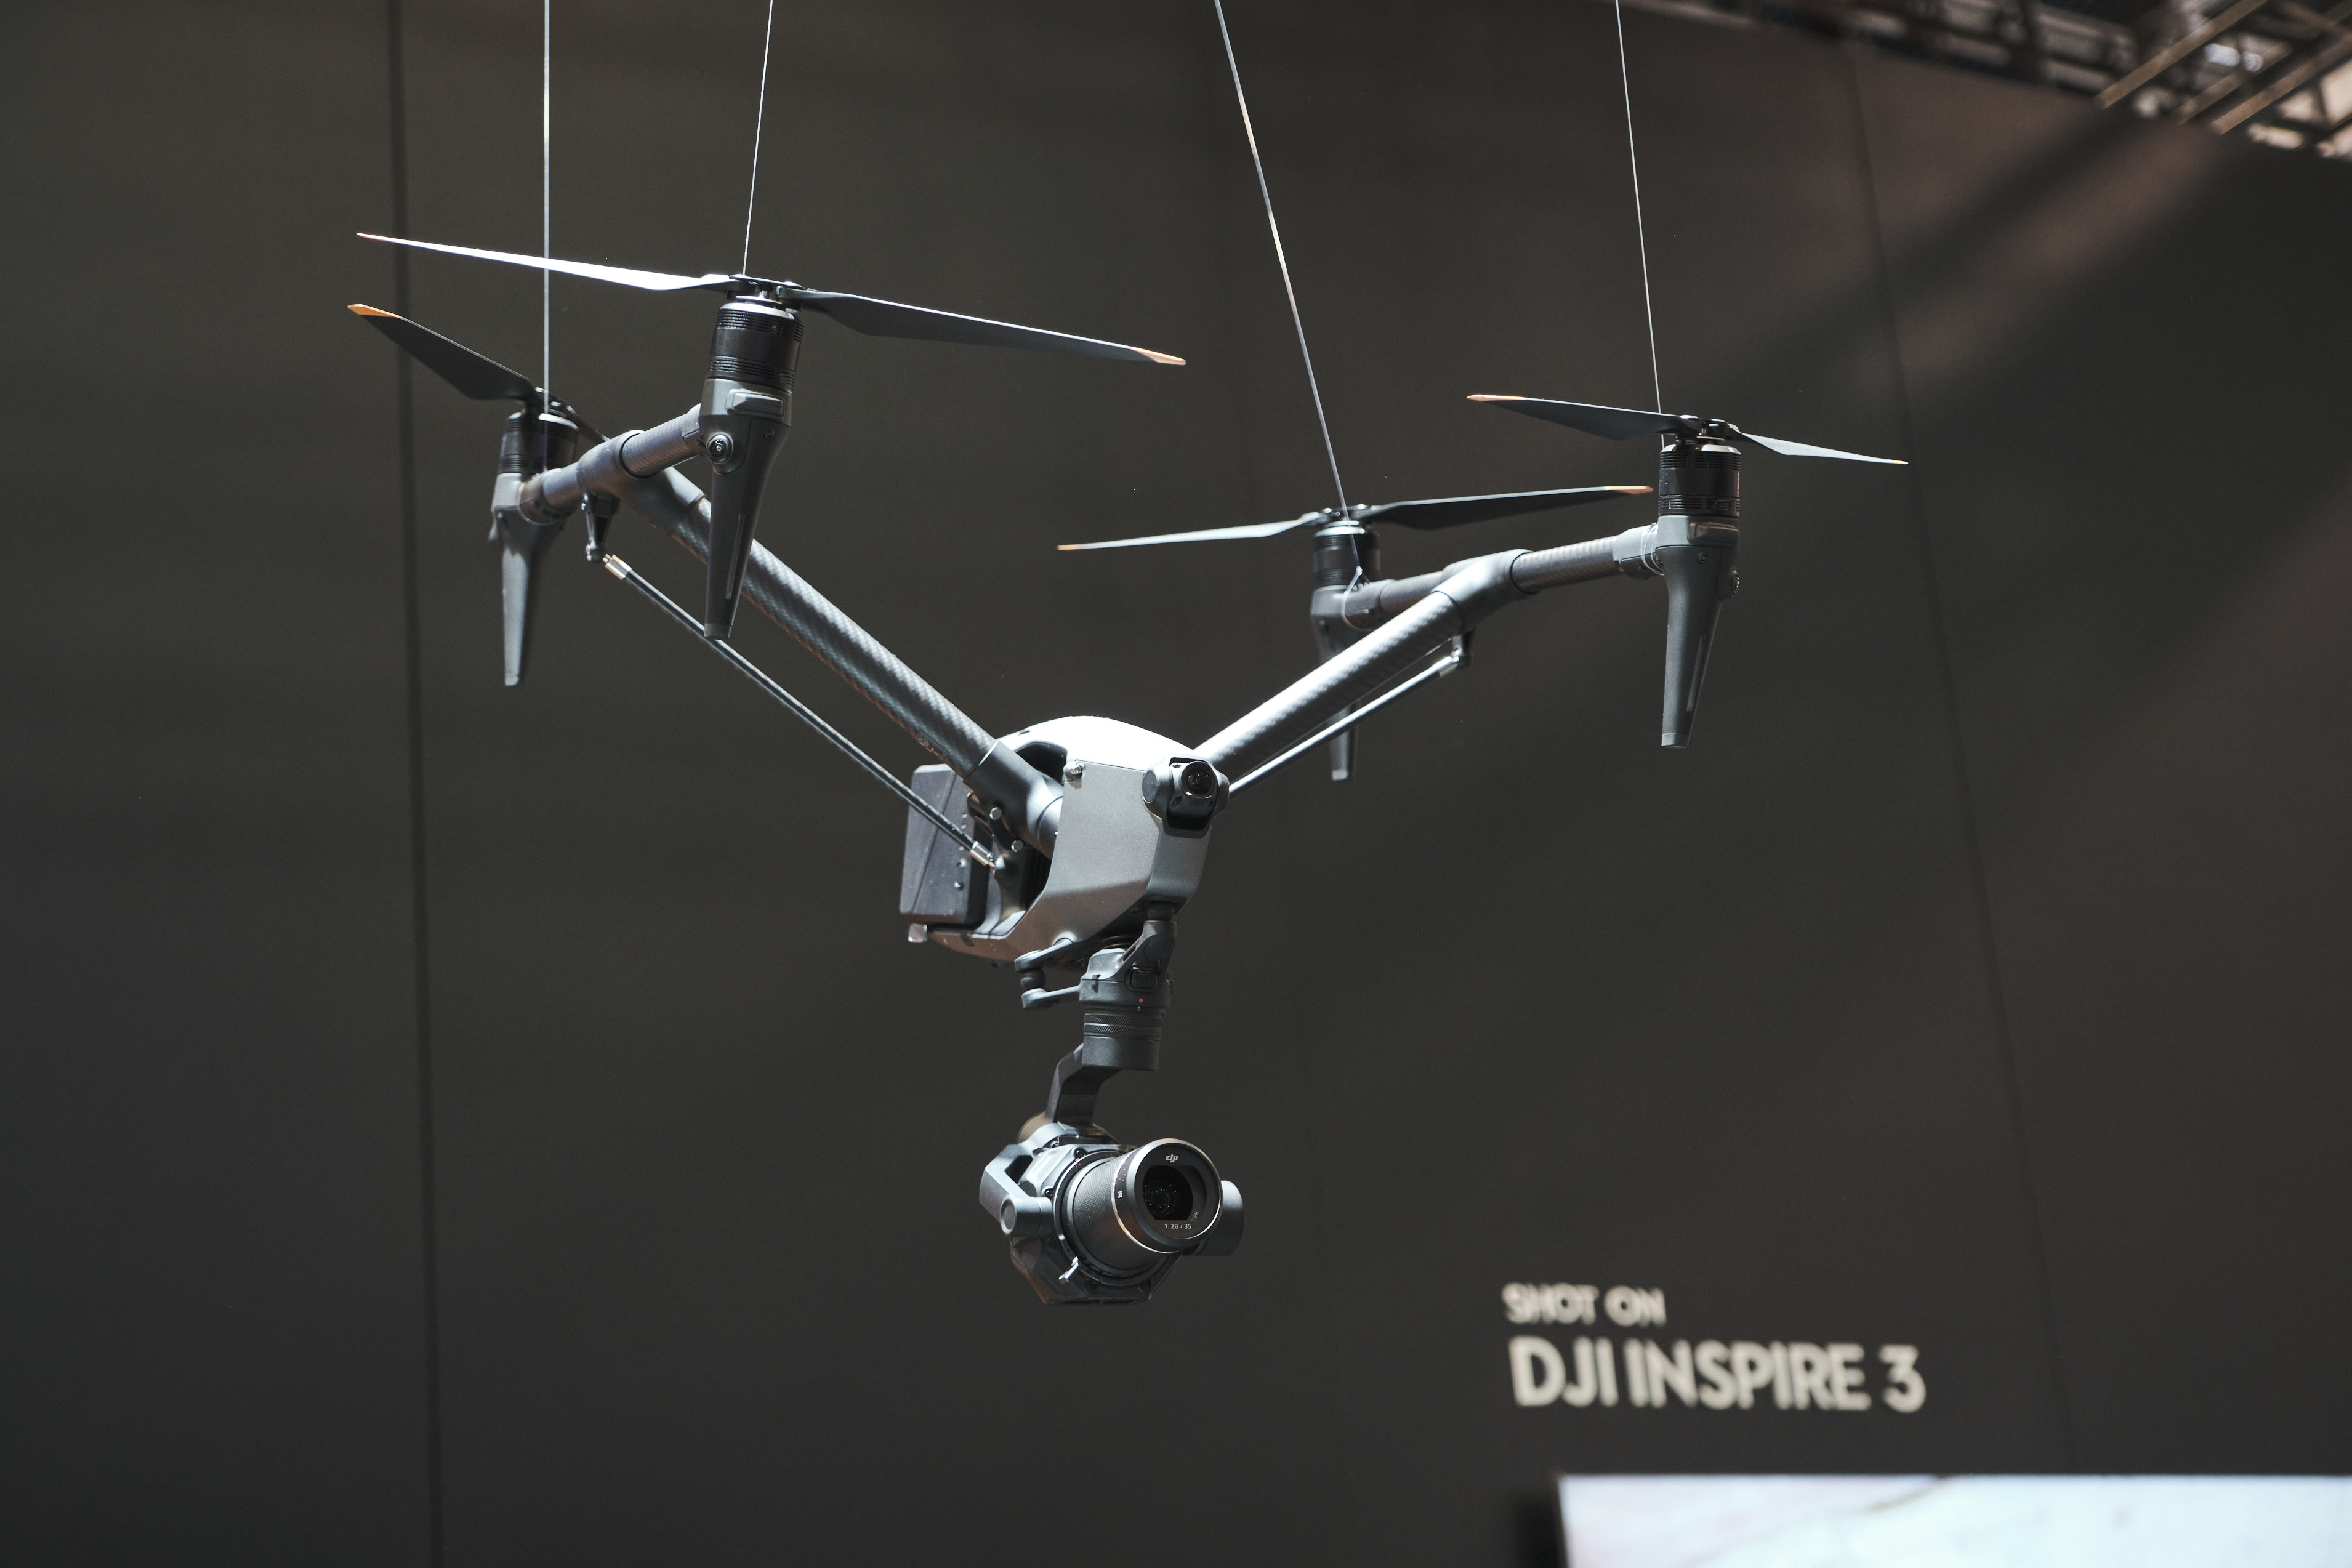 Inspire Series Professional Drones Comparison - Compare DJI Inspire 3, DJI  Inspire 2, and More - DJI